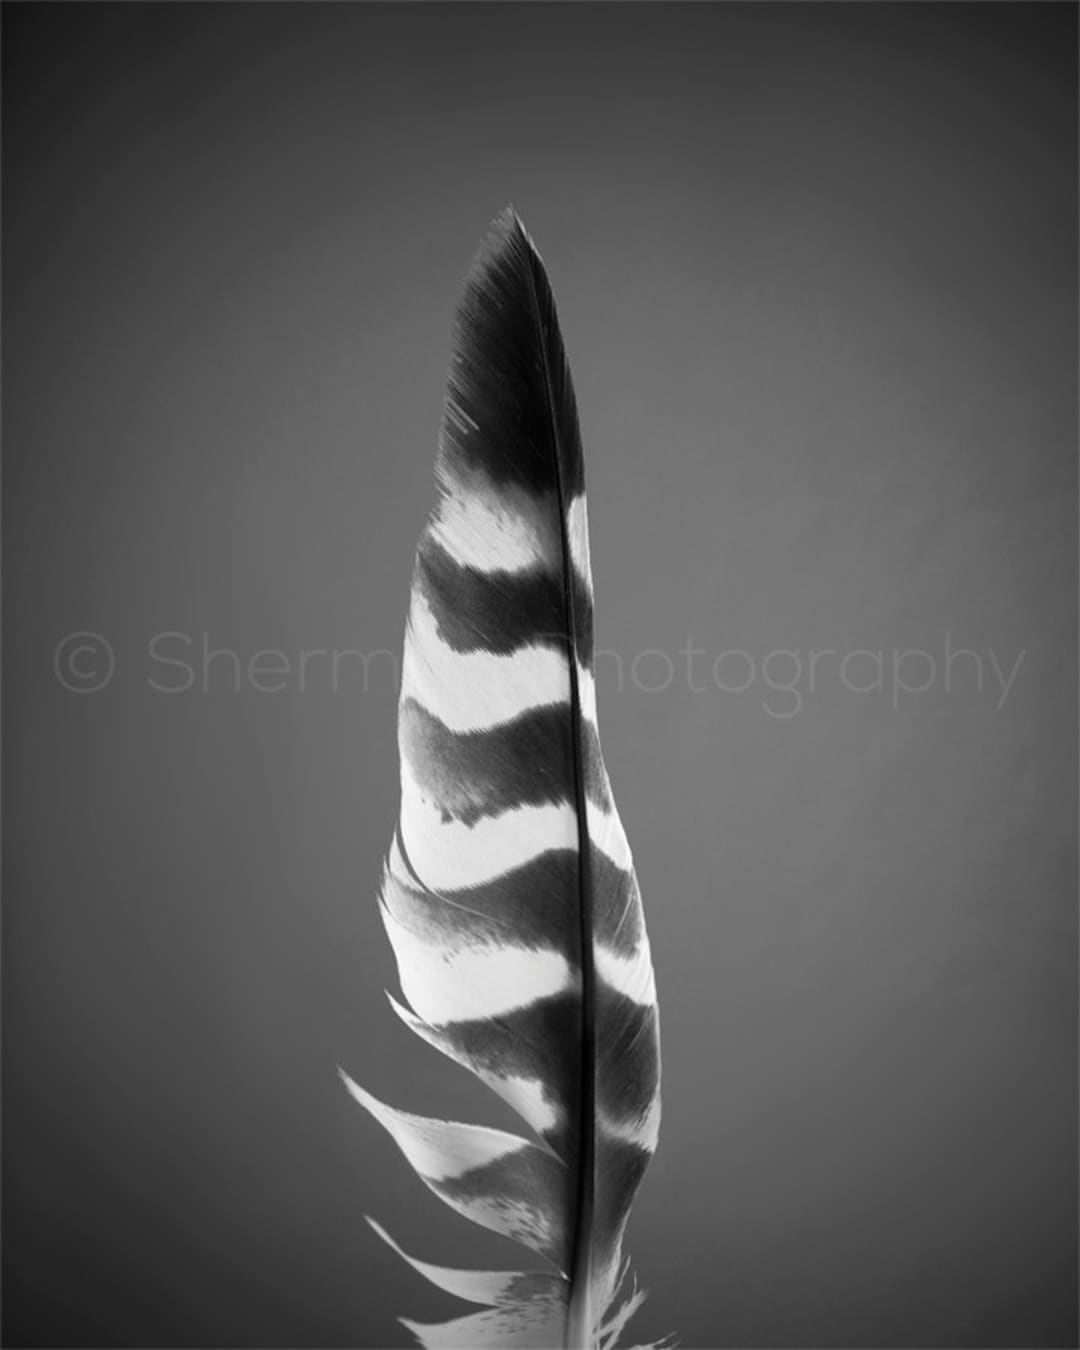 Feather Photo Black White Photography Striped Feather Image Feather Print  Dramatic Black White Photography Minimalist Home Decor 